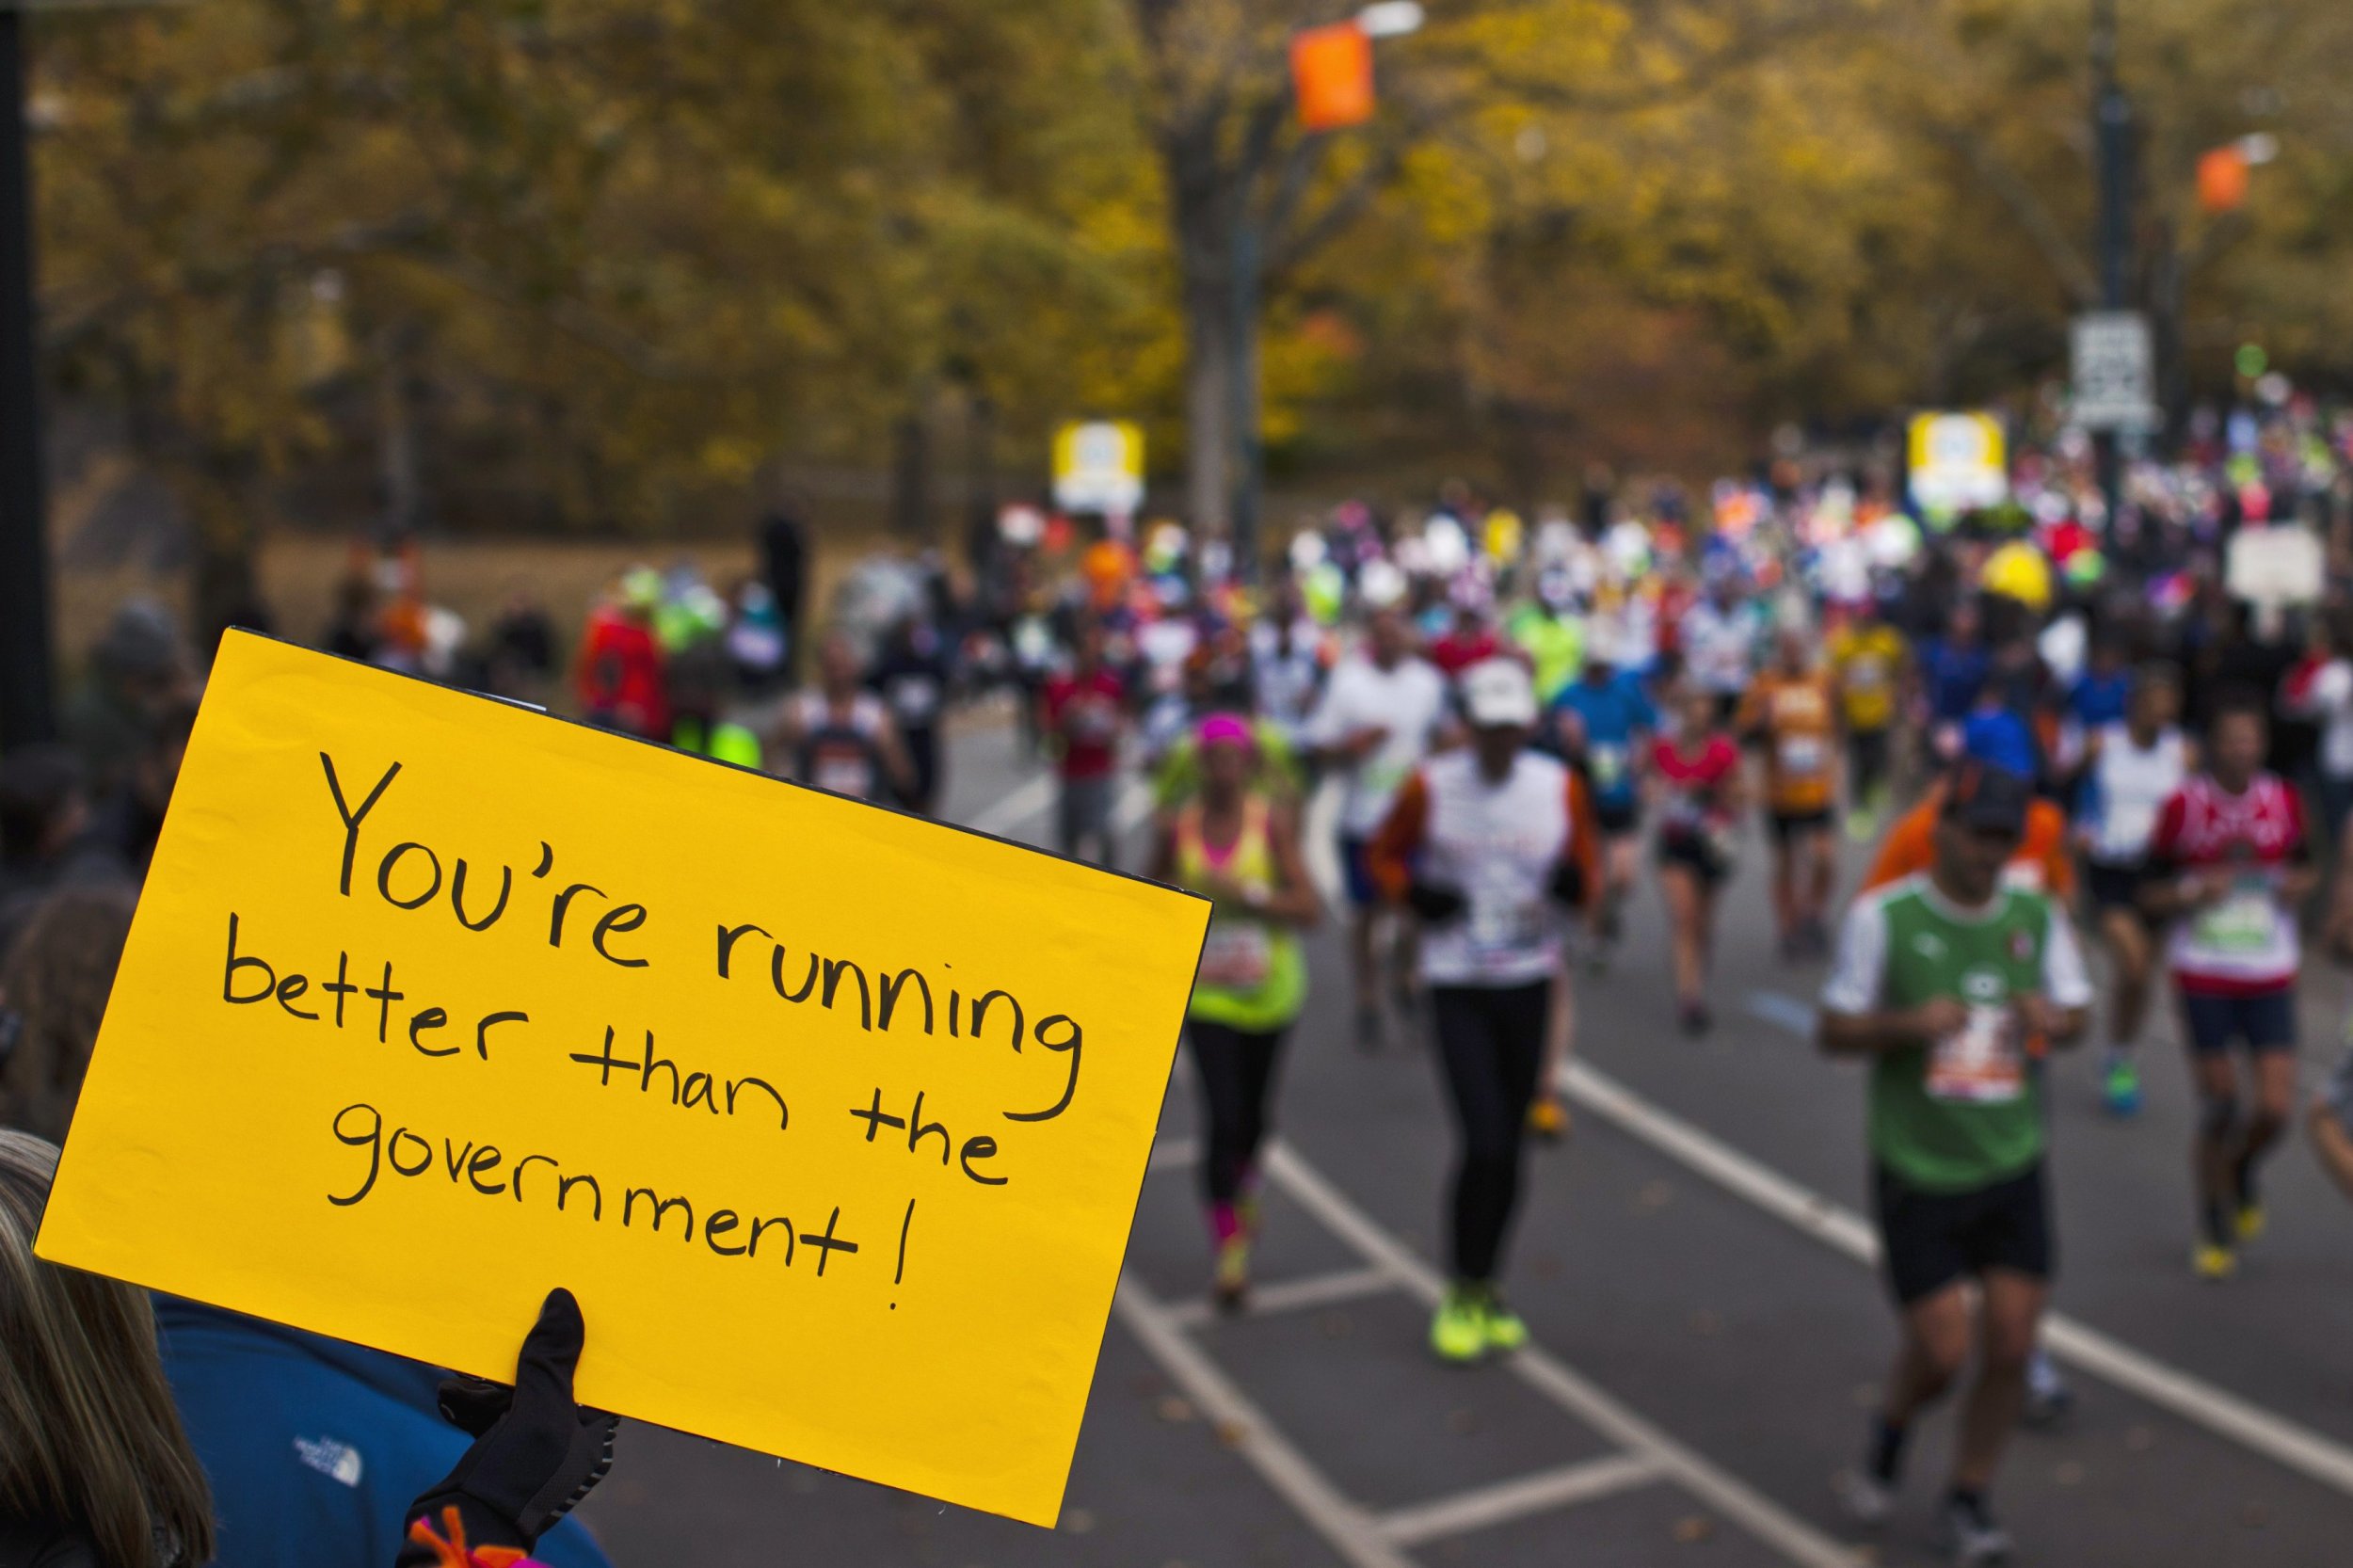 New York City Marathon 2013 Slideshow 9 Inspiring Moments You'll Want